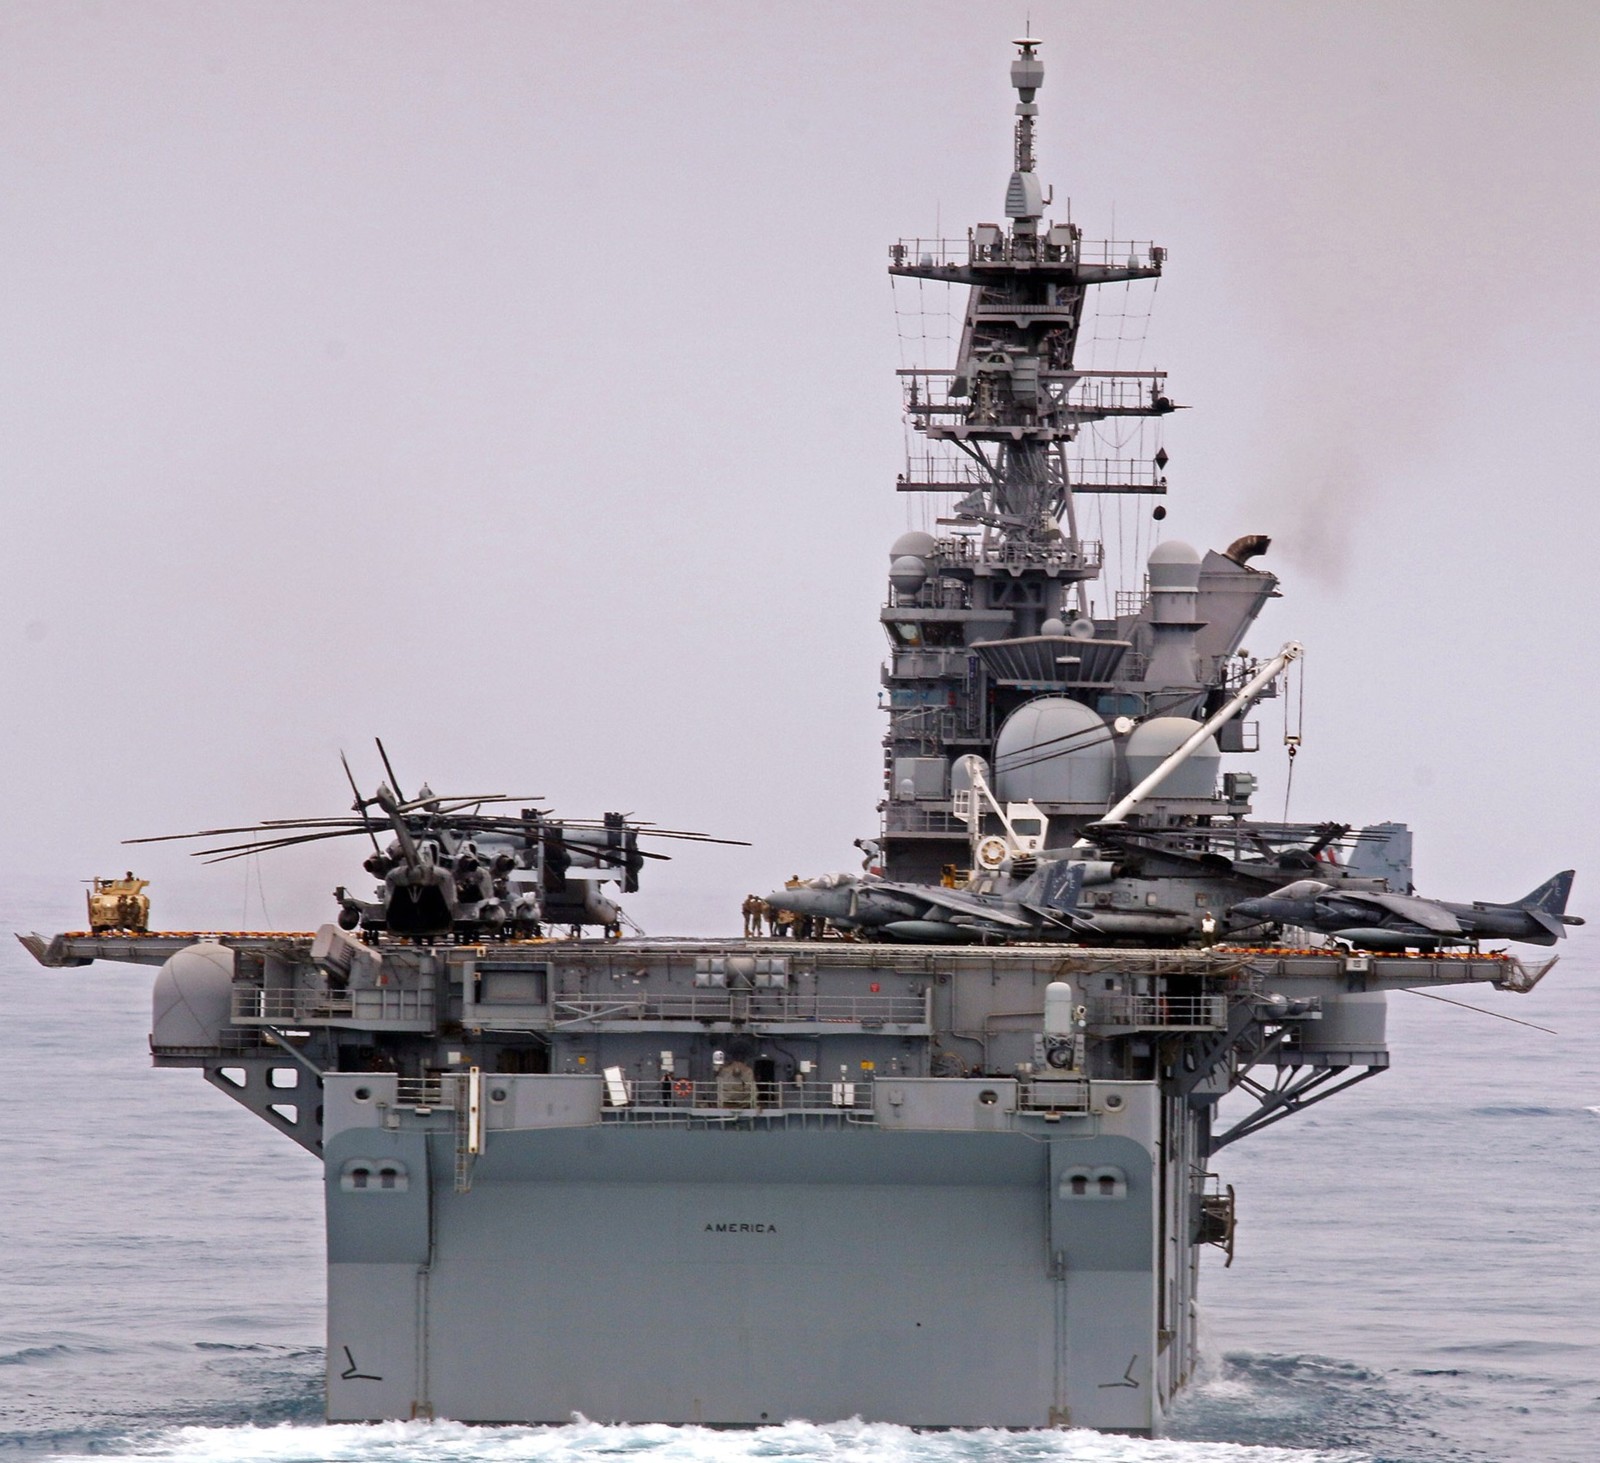 lha-6 uss america amphibious assault ship us navy 51